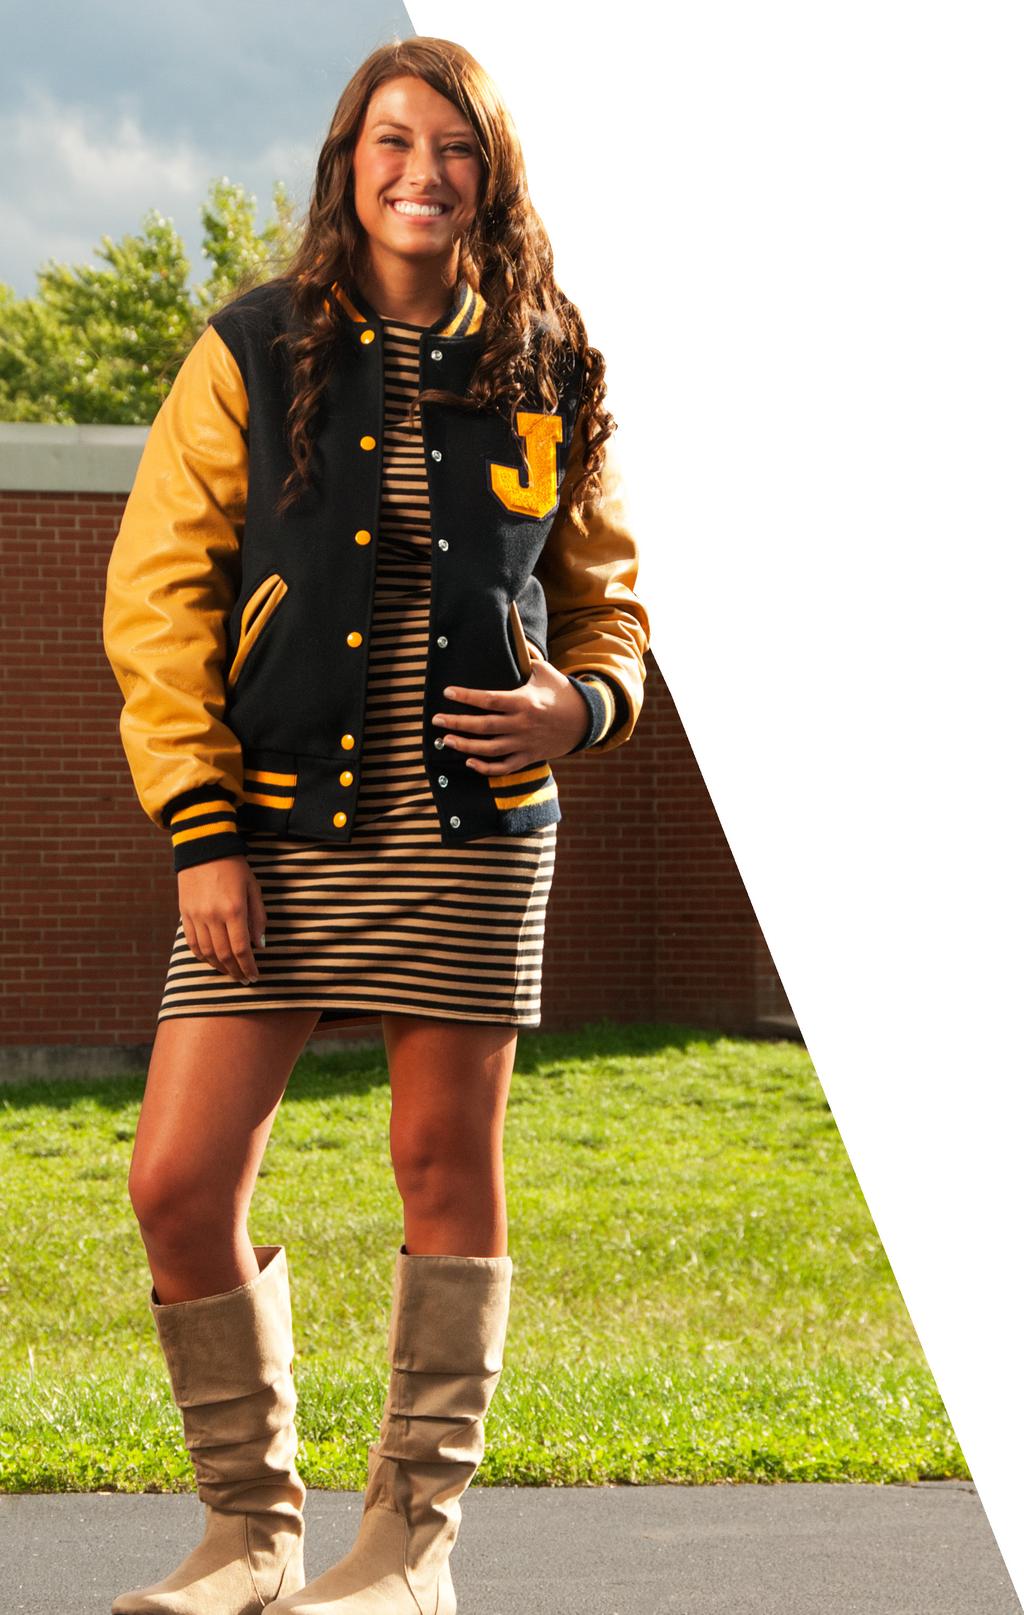 WINTER / 2012 VARSITY JACKET TAKES fashion forward Holloway s new juniors cut jacket combines the pop culture